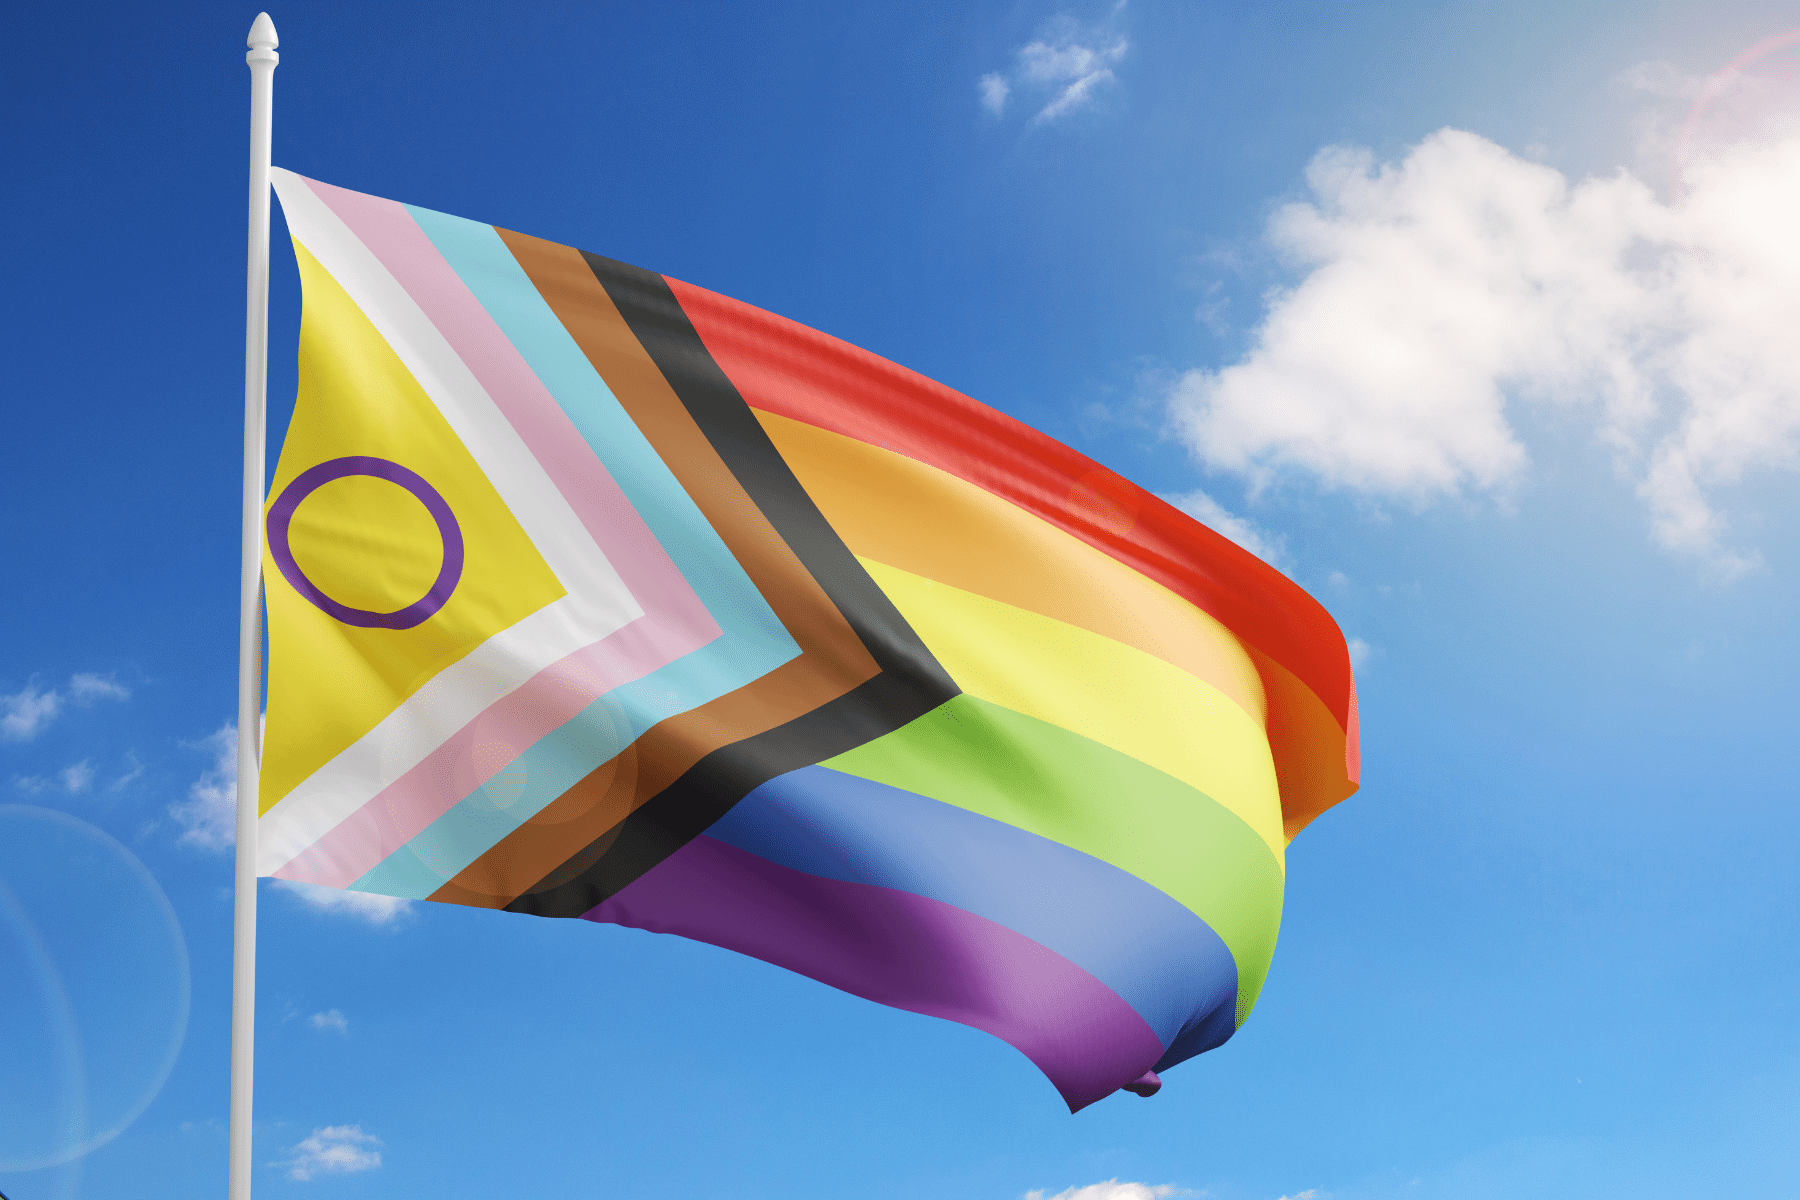 picture of the progress pride flag